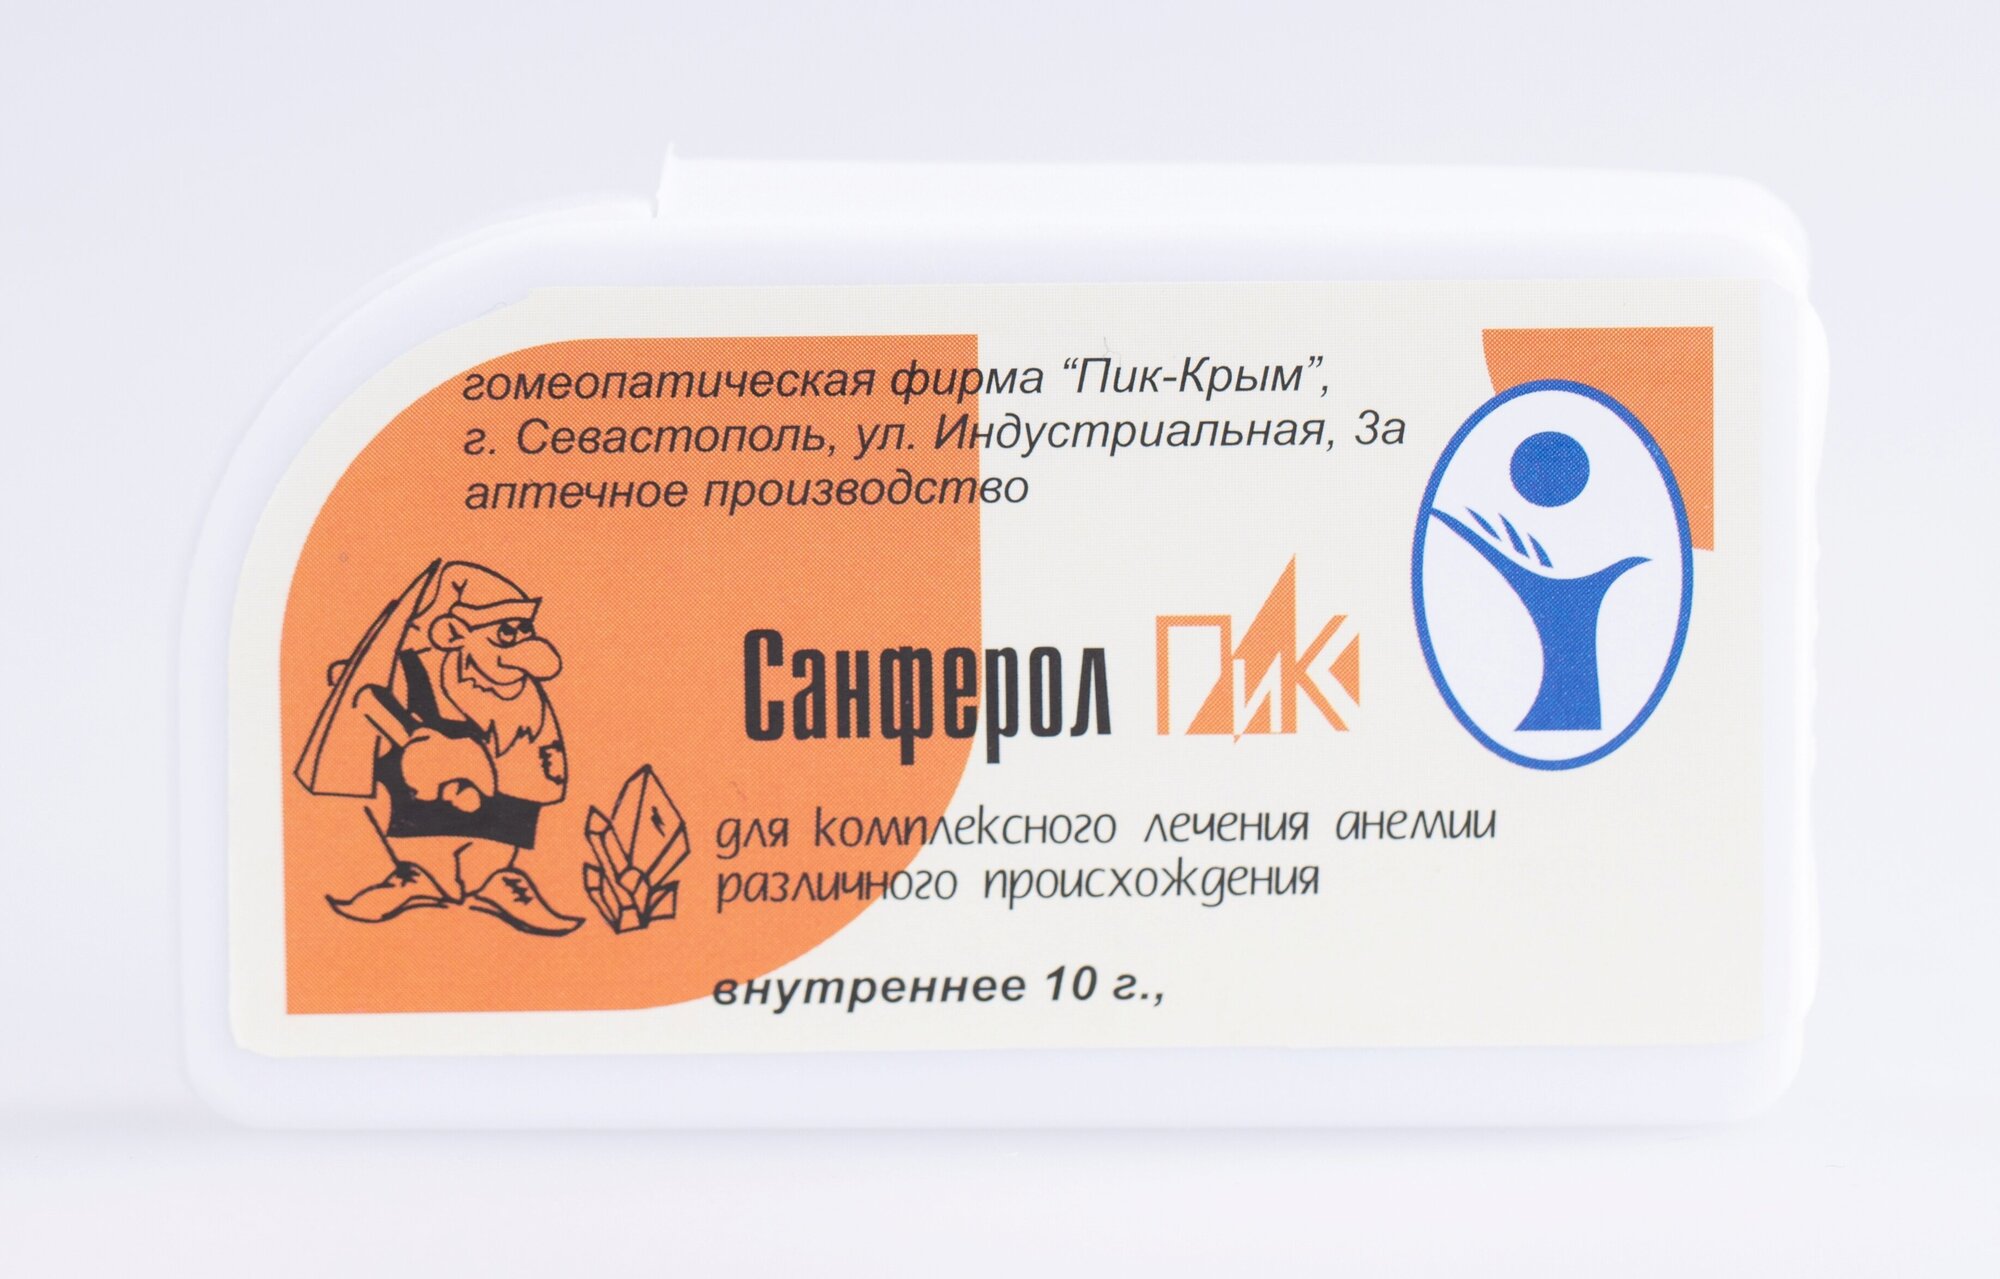 Санферол-ПиК гомеопатические гранулы при анемии 10 гр.